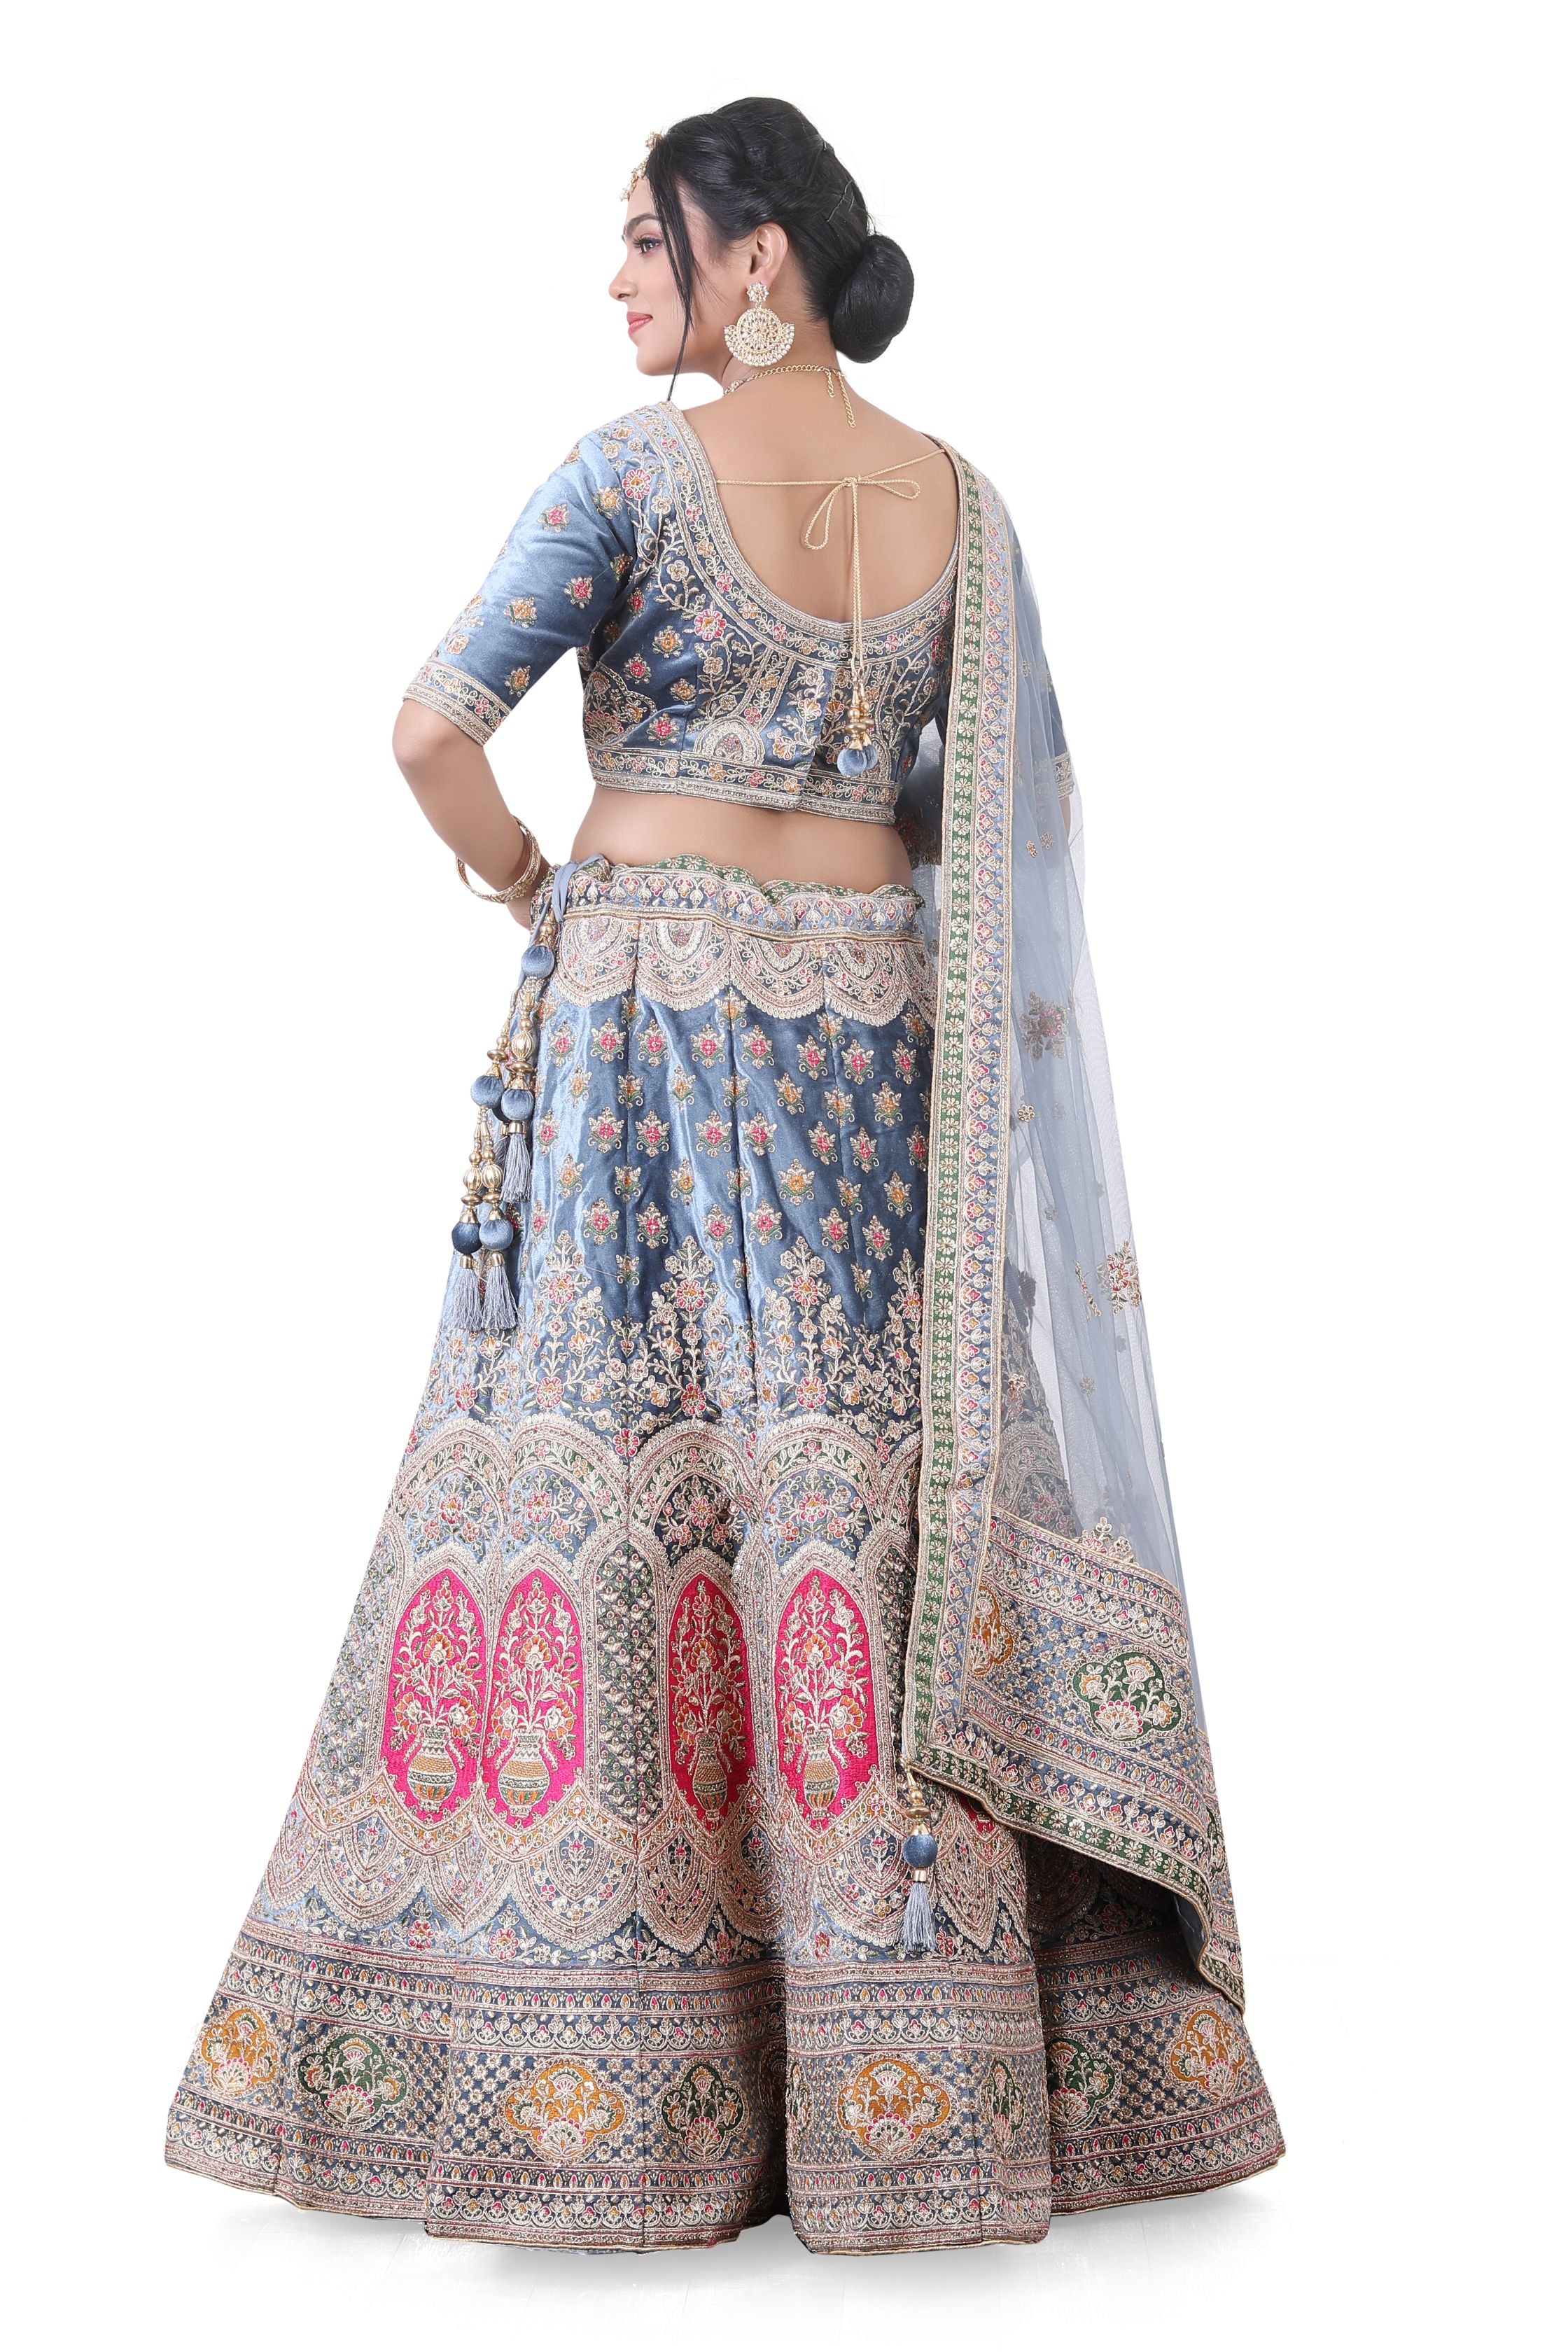 Powder blue Velvet Bridal Lehenga Choli - Premium Bridal lehenga from Dulhan Exclusives - Just $1185! Shop now at Dulhan Exclusives